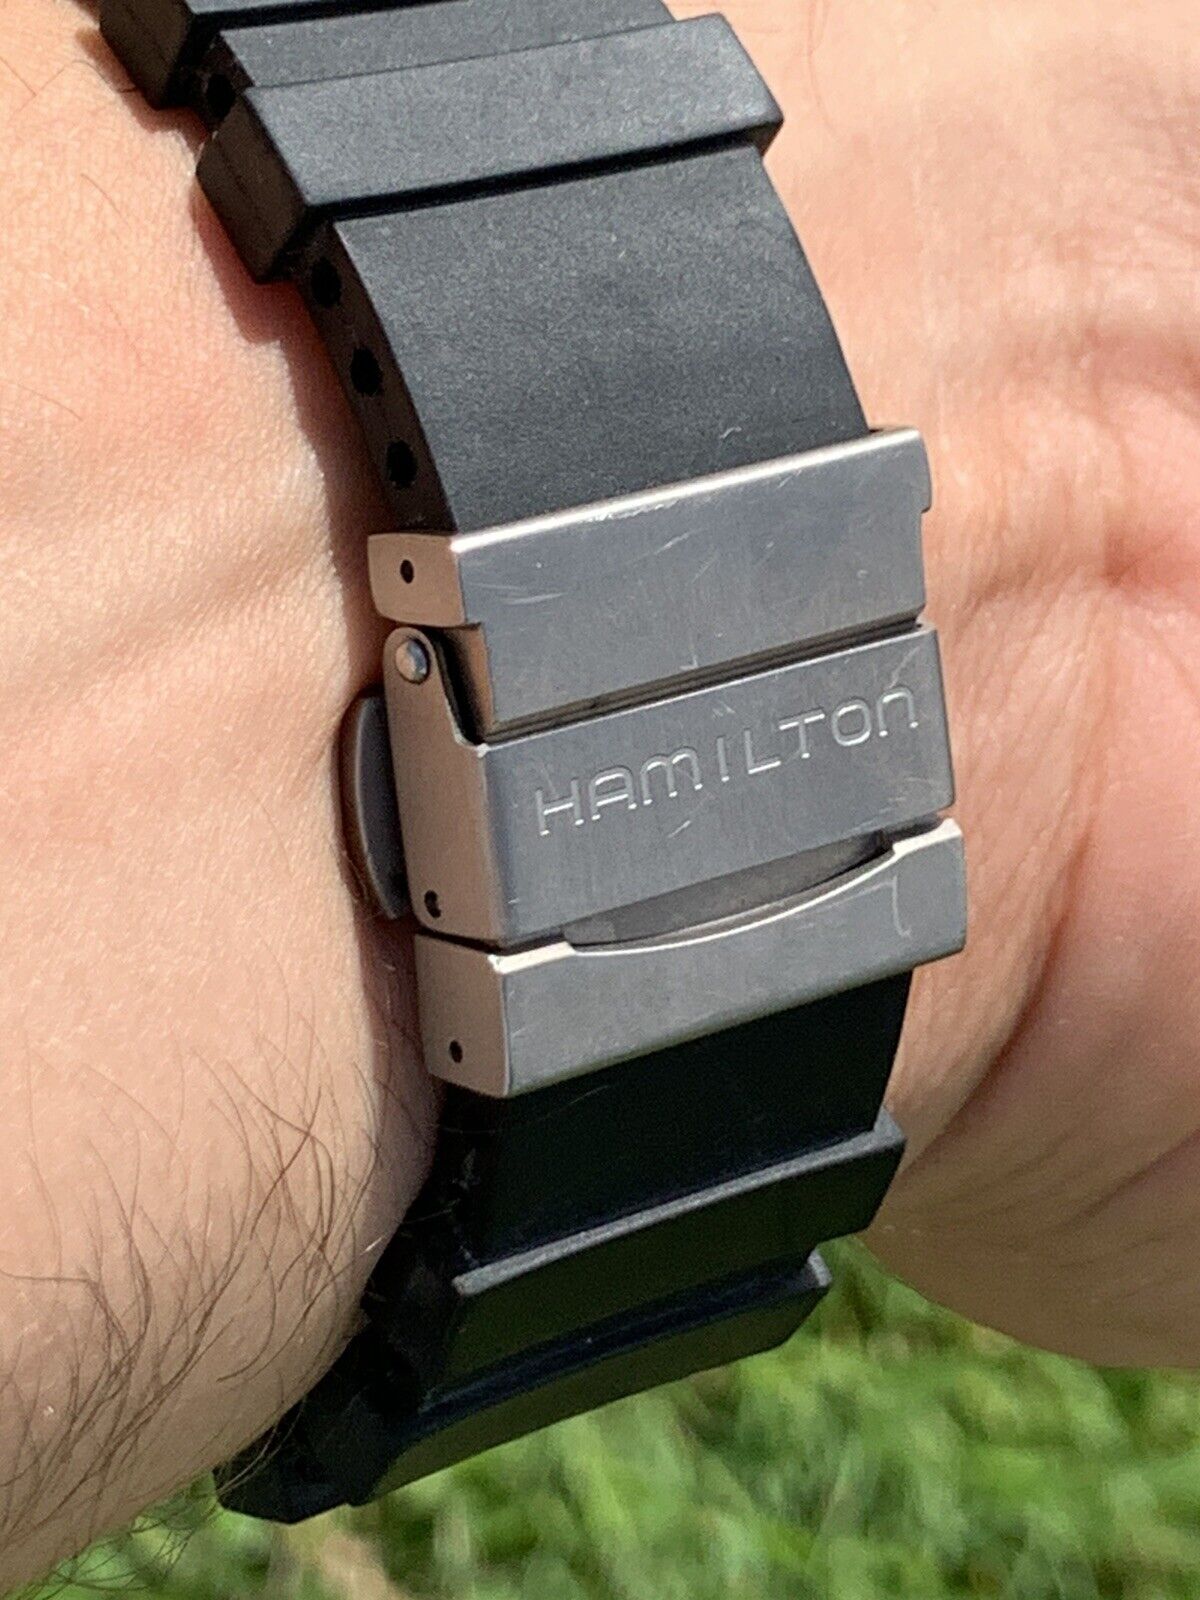 Rare Hamilton Titanium Code Breaker with Box and International Warranty card